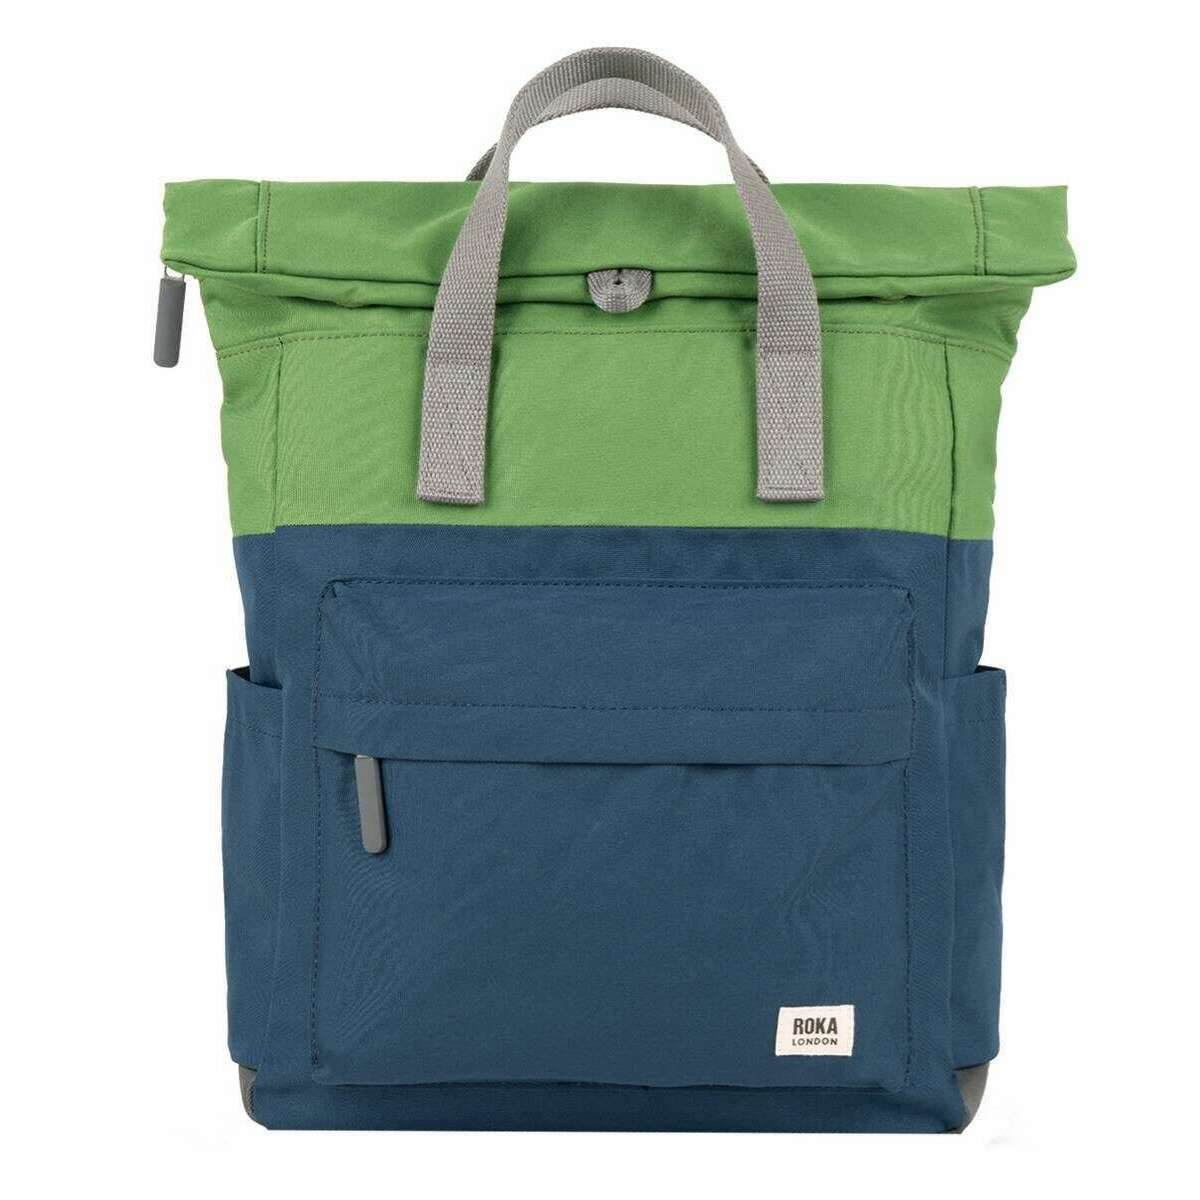 Roka Canfield B Medium Creative Waste Two Tone Recycled Canvas Backpack - Deep Blue/Foliage Green